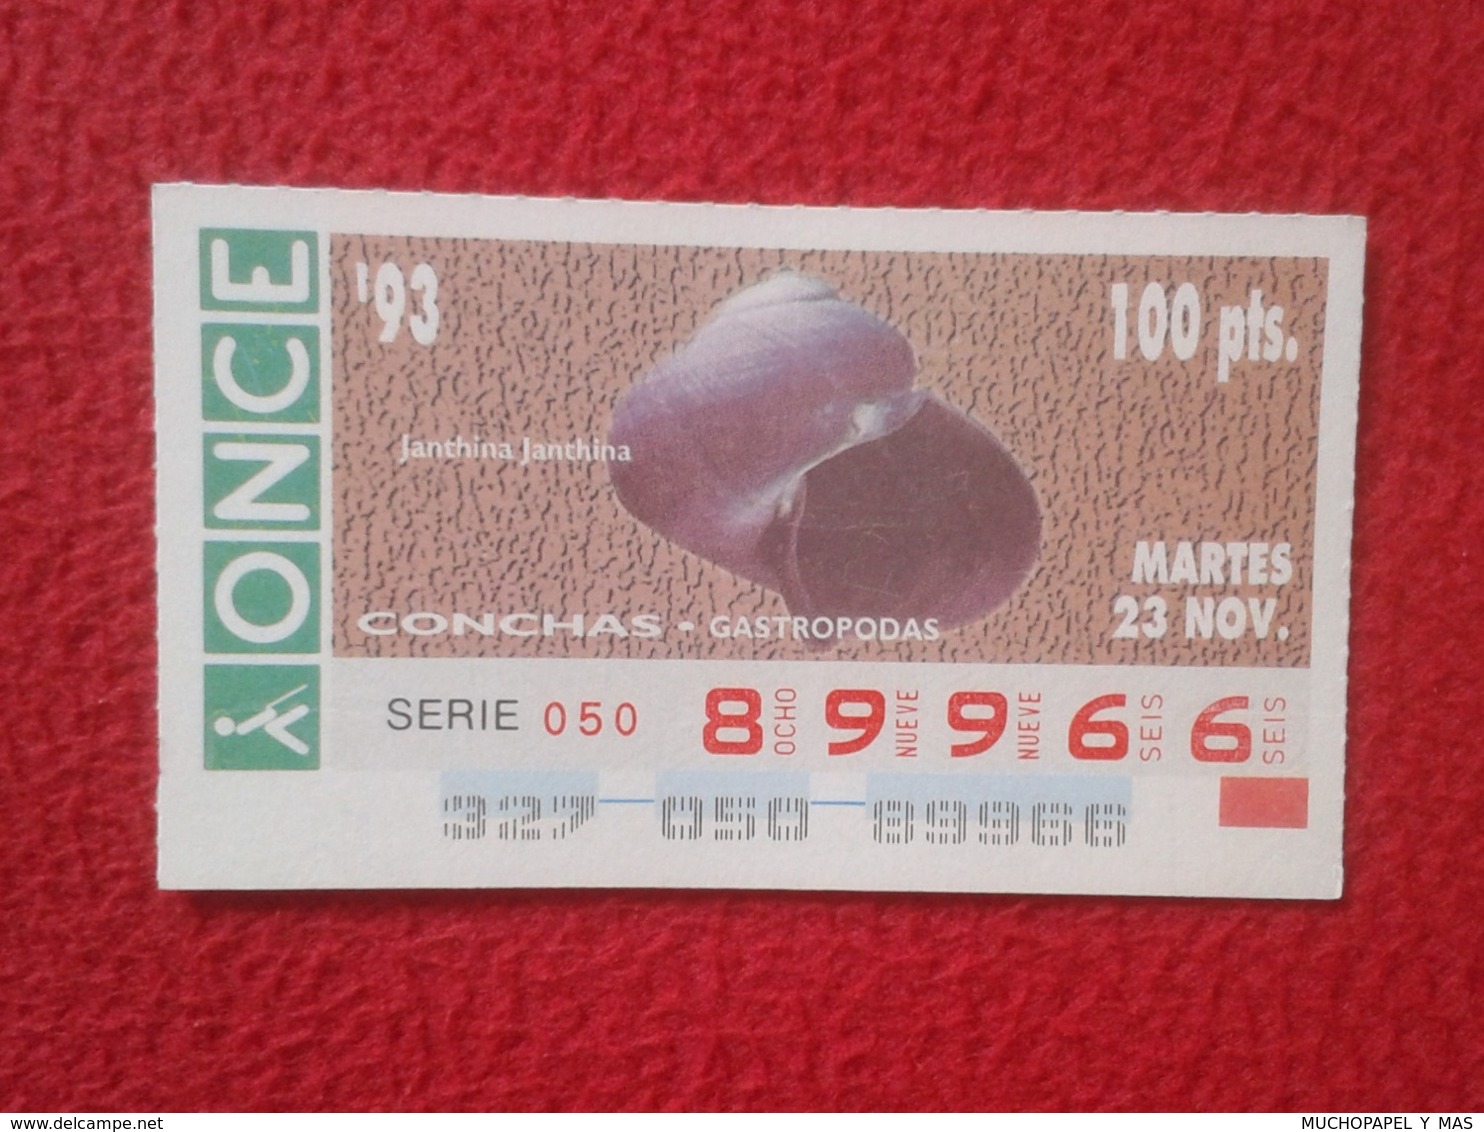 CUPÓN DE ONCE 1993 LOTTERY LOTERIE SPAIN LOTERÍA CONCHAS MARINAS O SIMIL MARINE SHELLS SHELL COQUILLAGES THE SEA CONCHA - Billetes De Lotería